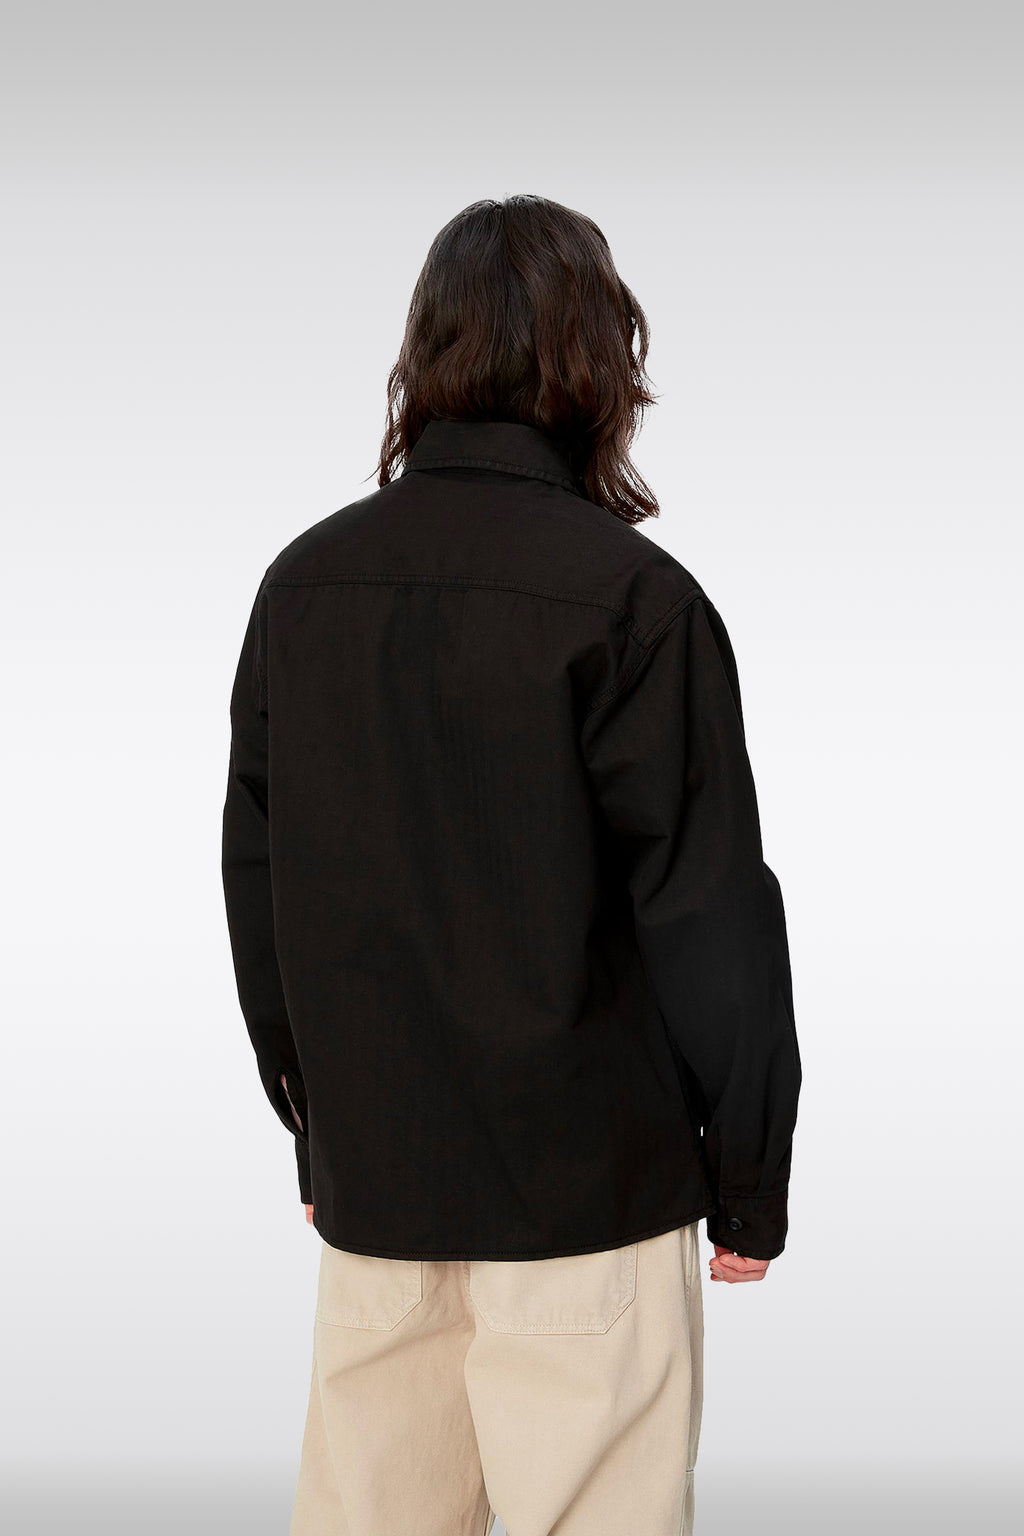 alt-image__Black-herringbone-cotton-jacket-with-zip---Rainer-Shirt-Jac